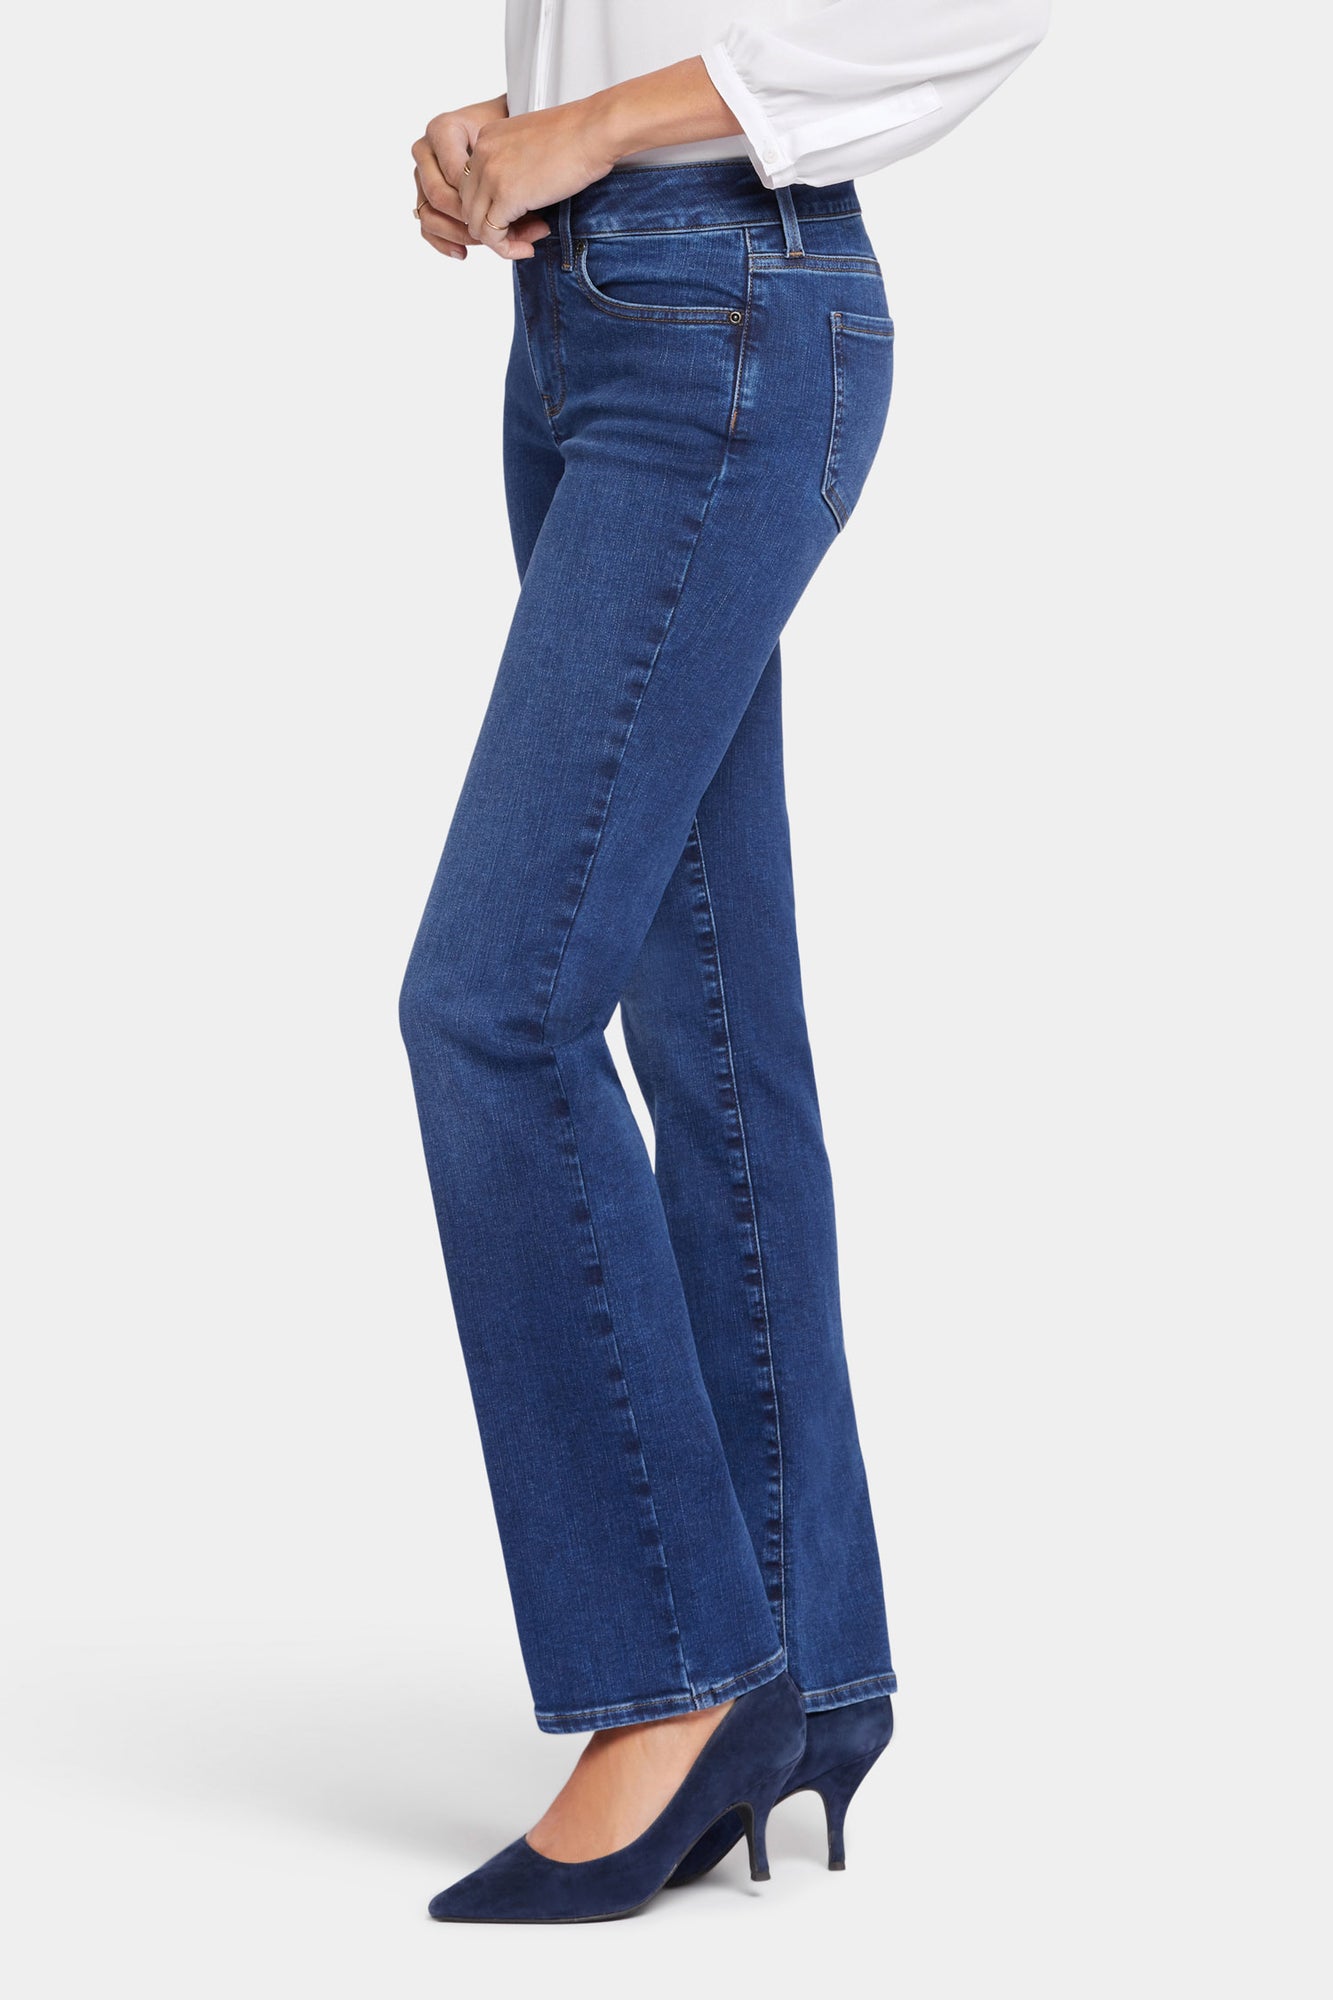 NYDJ Marilyn Straight Jeans  - Cooper